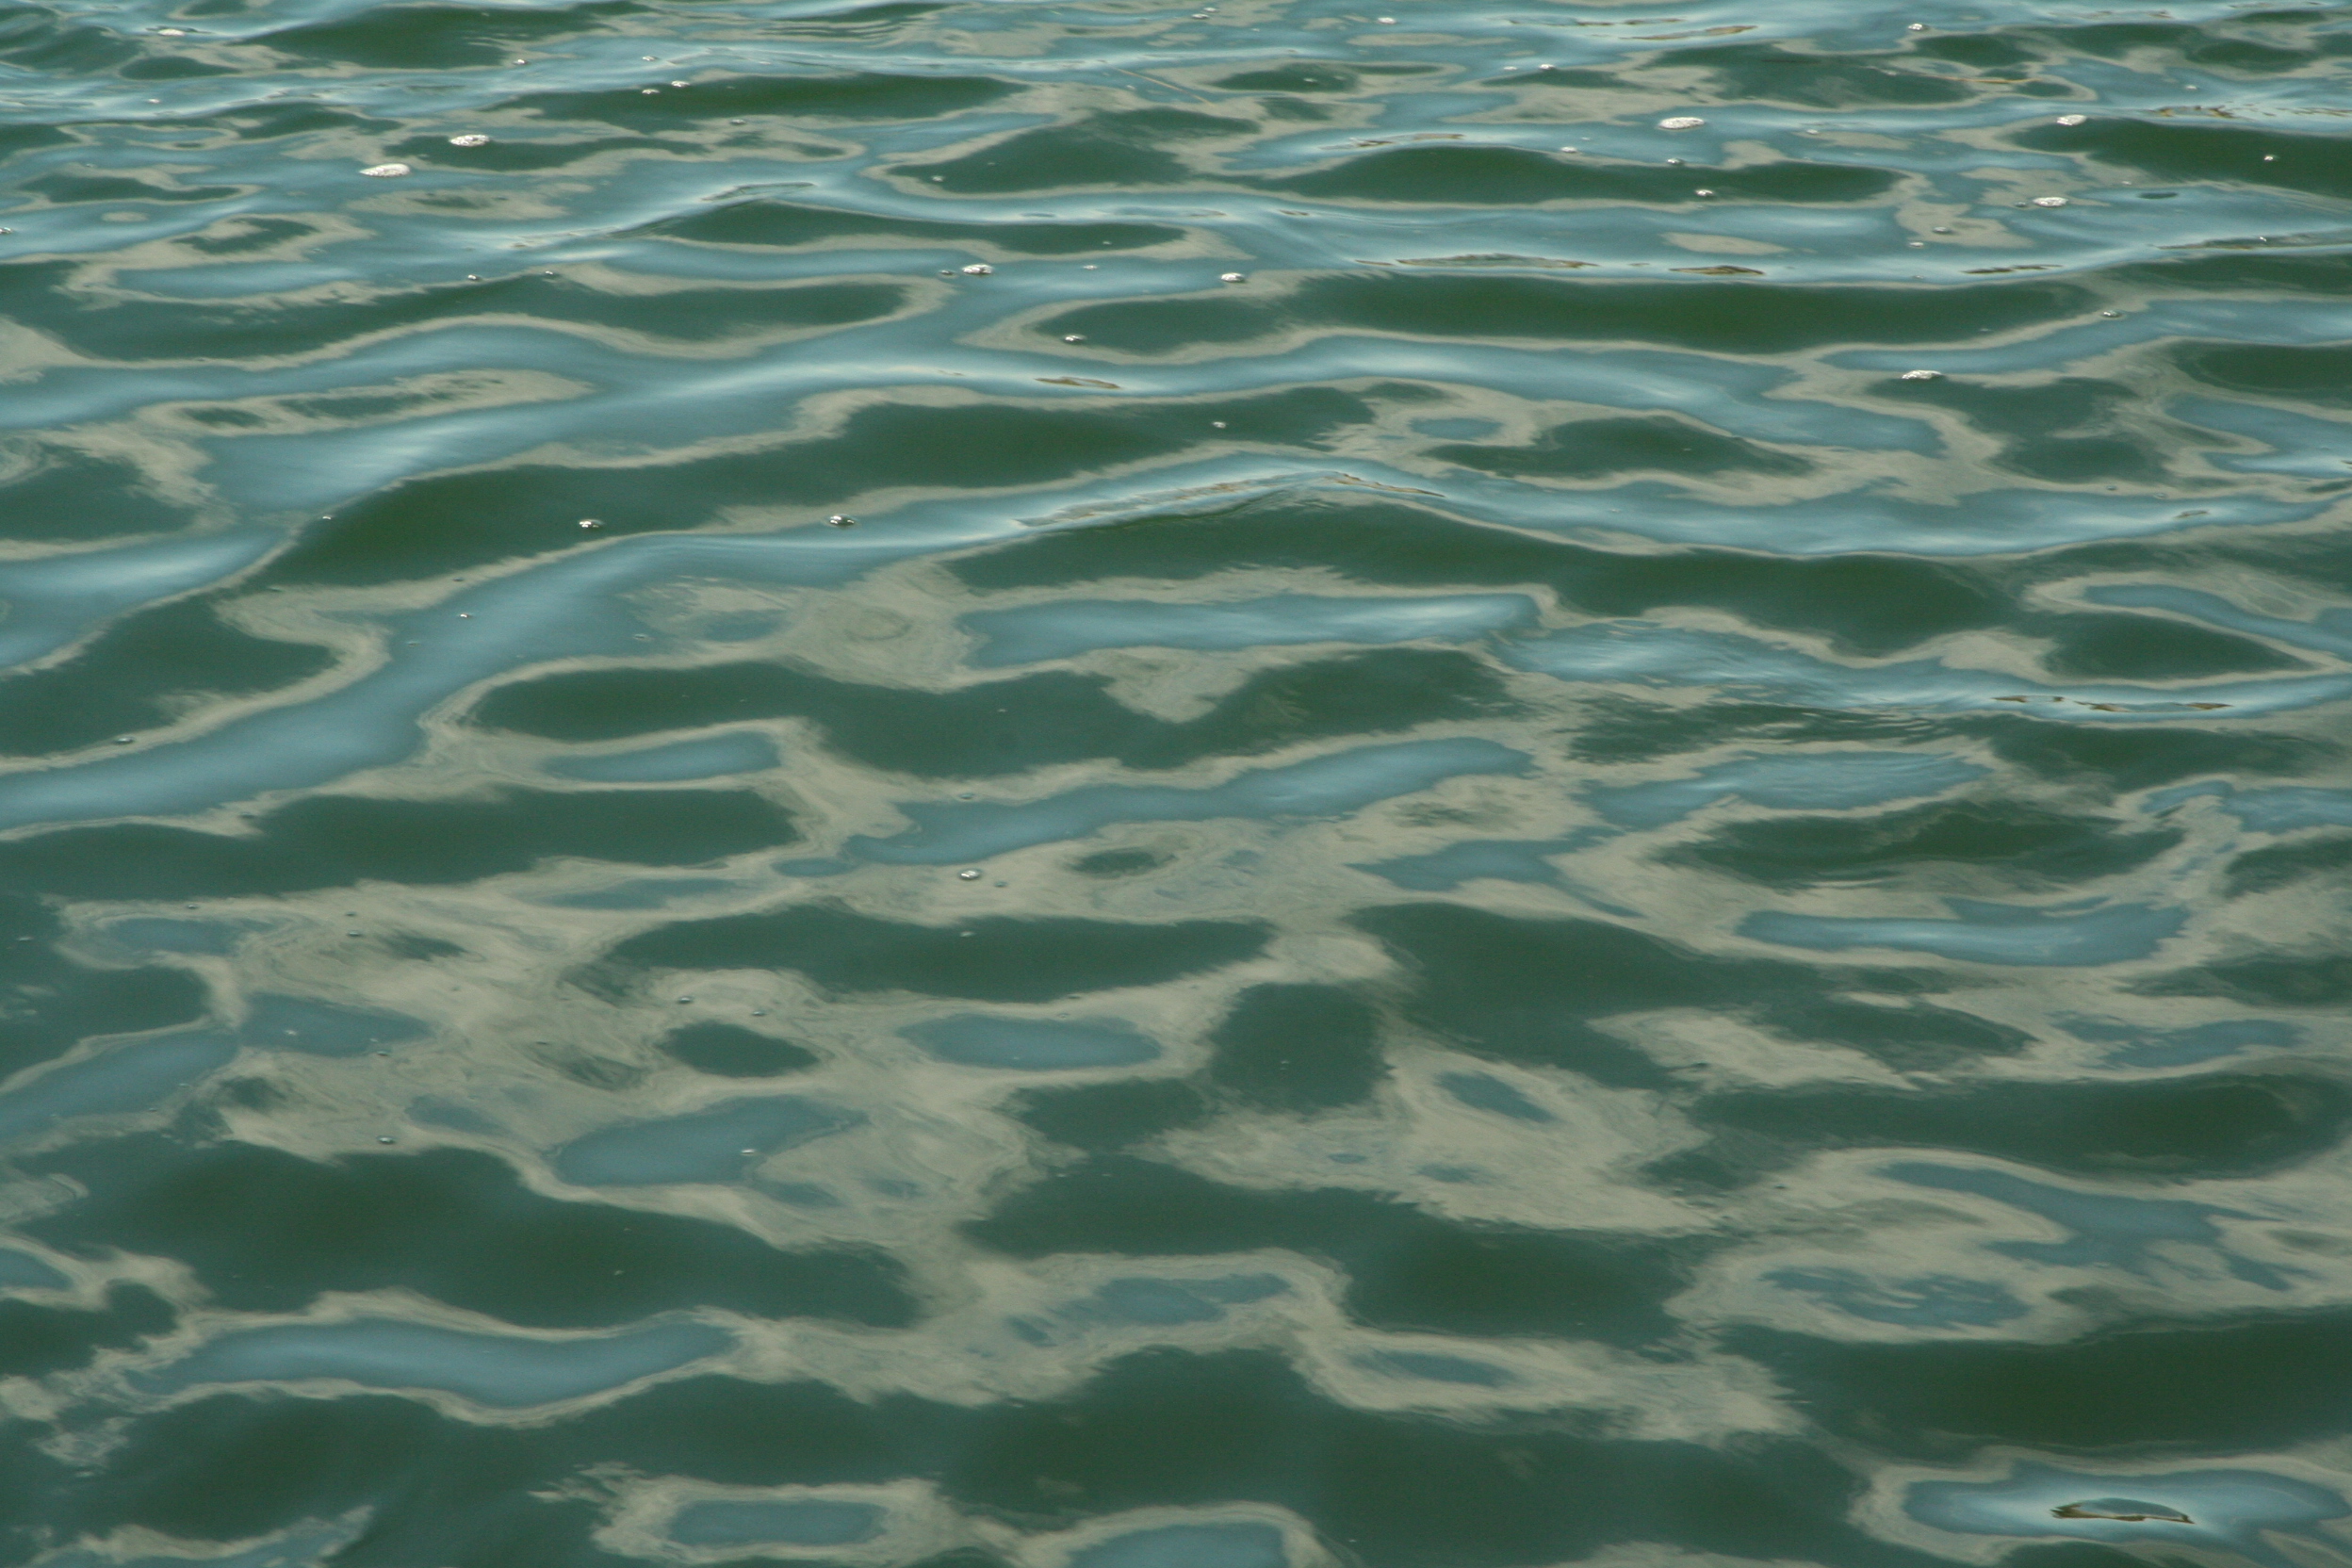 File:Ocean water surface texture - Martha's Vineyard.JPG - Wikimedia ...